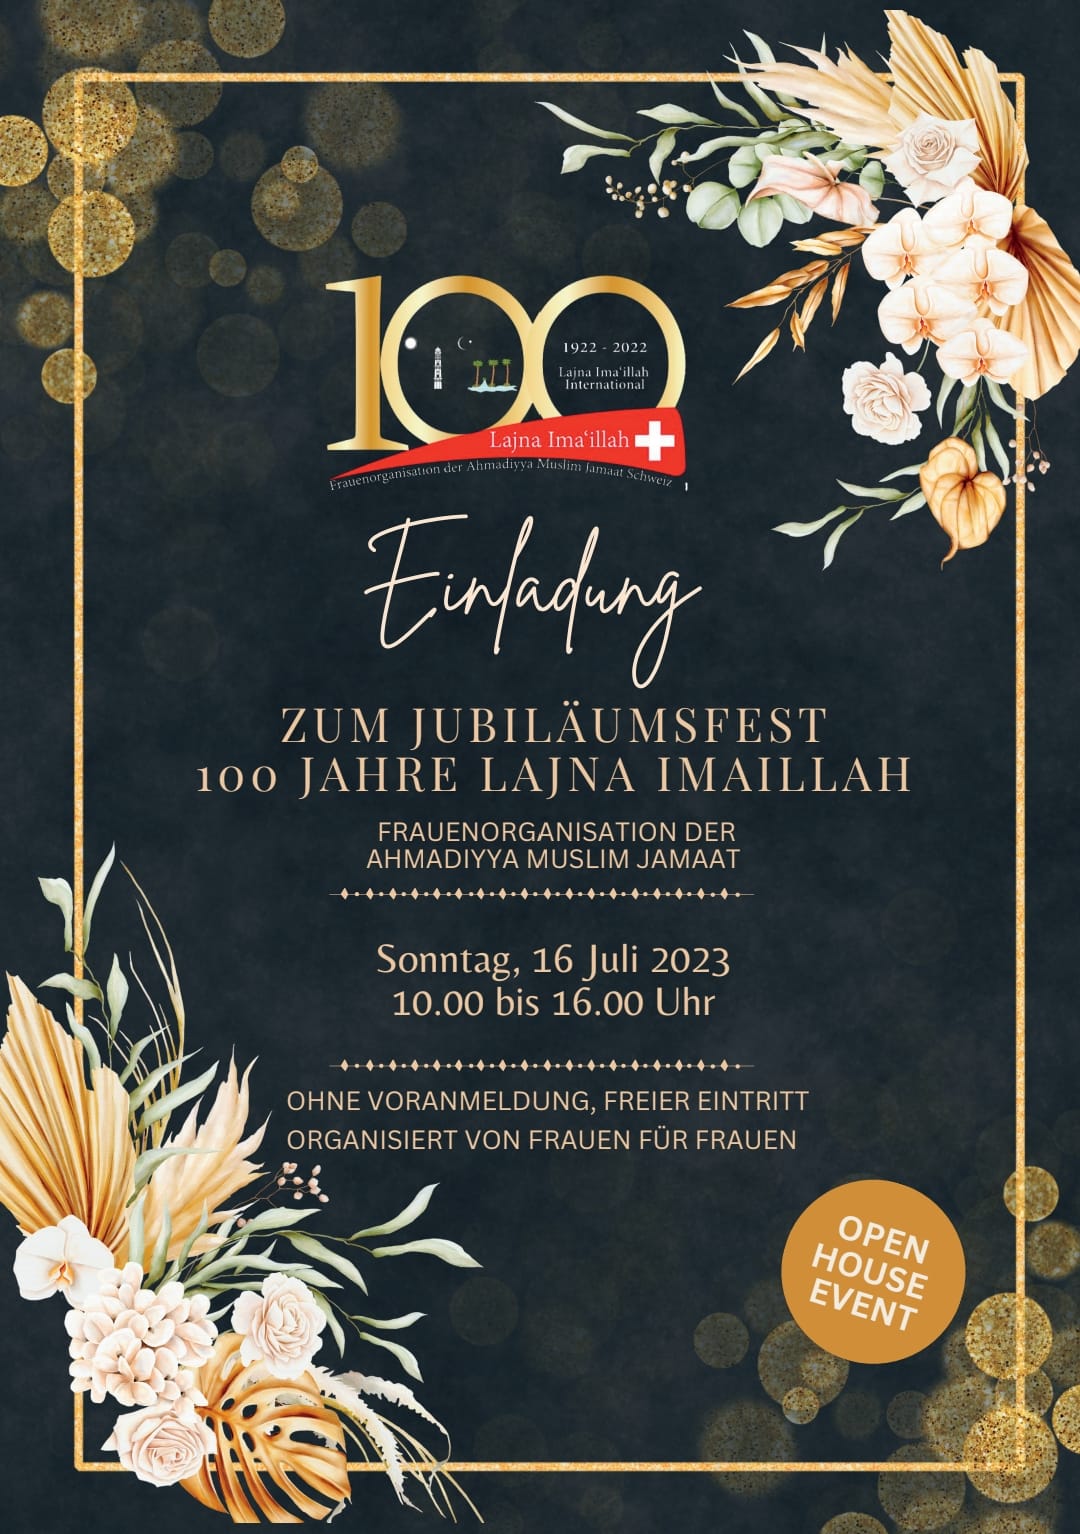 Zum Jubilaumsfest 100 Jahre Lajna Imaillah